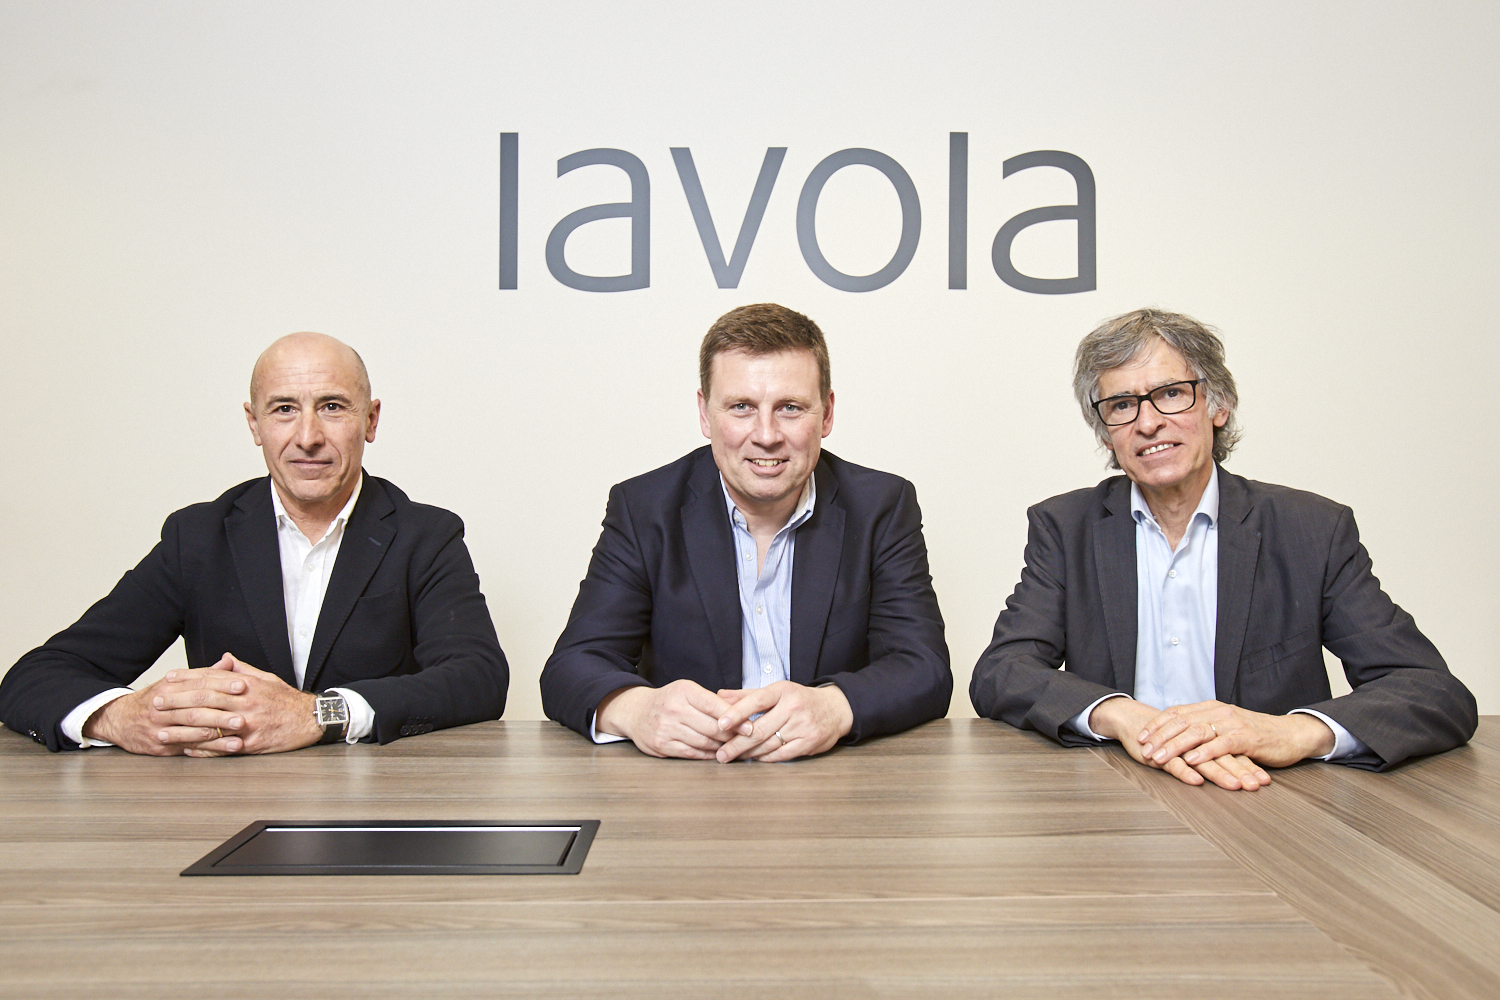 Lavola s’alia amb Anthesis i reforça la seva presència al mercat internacional